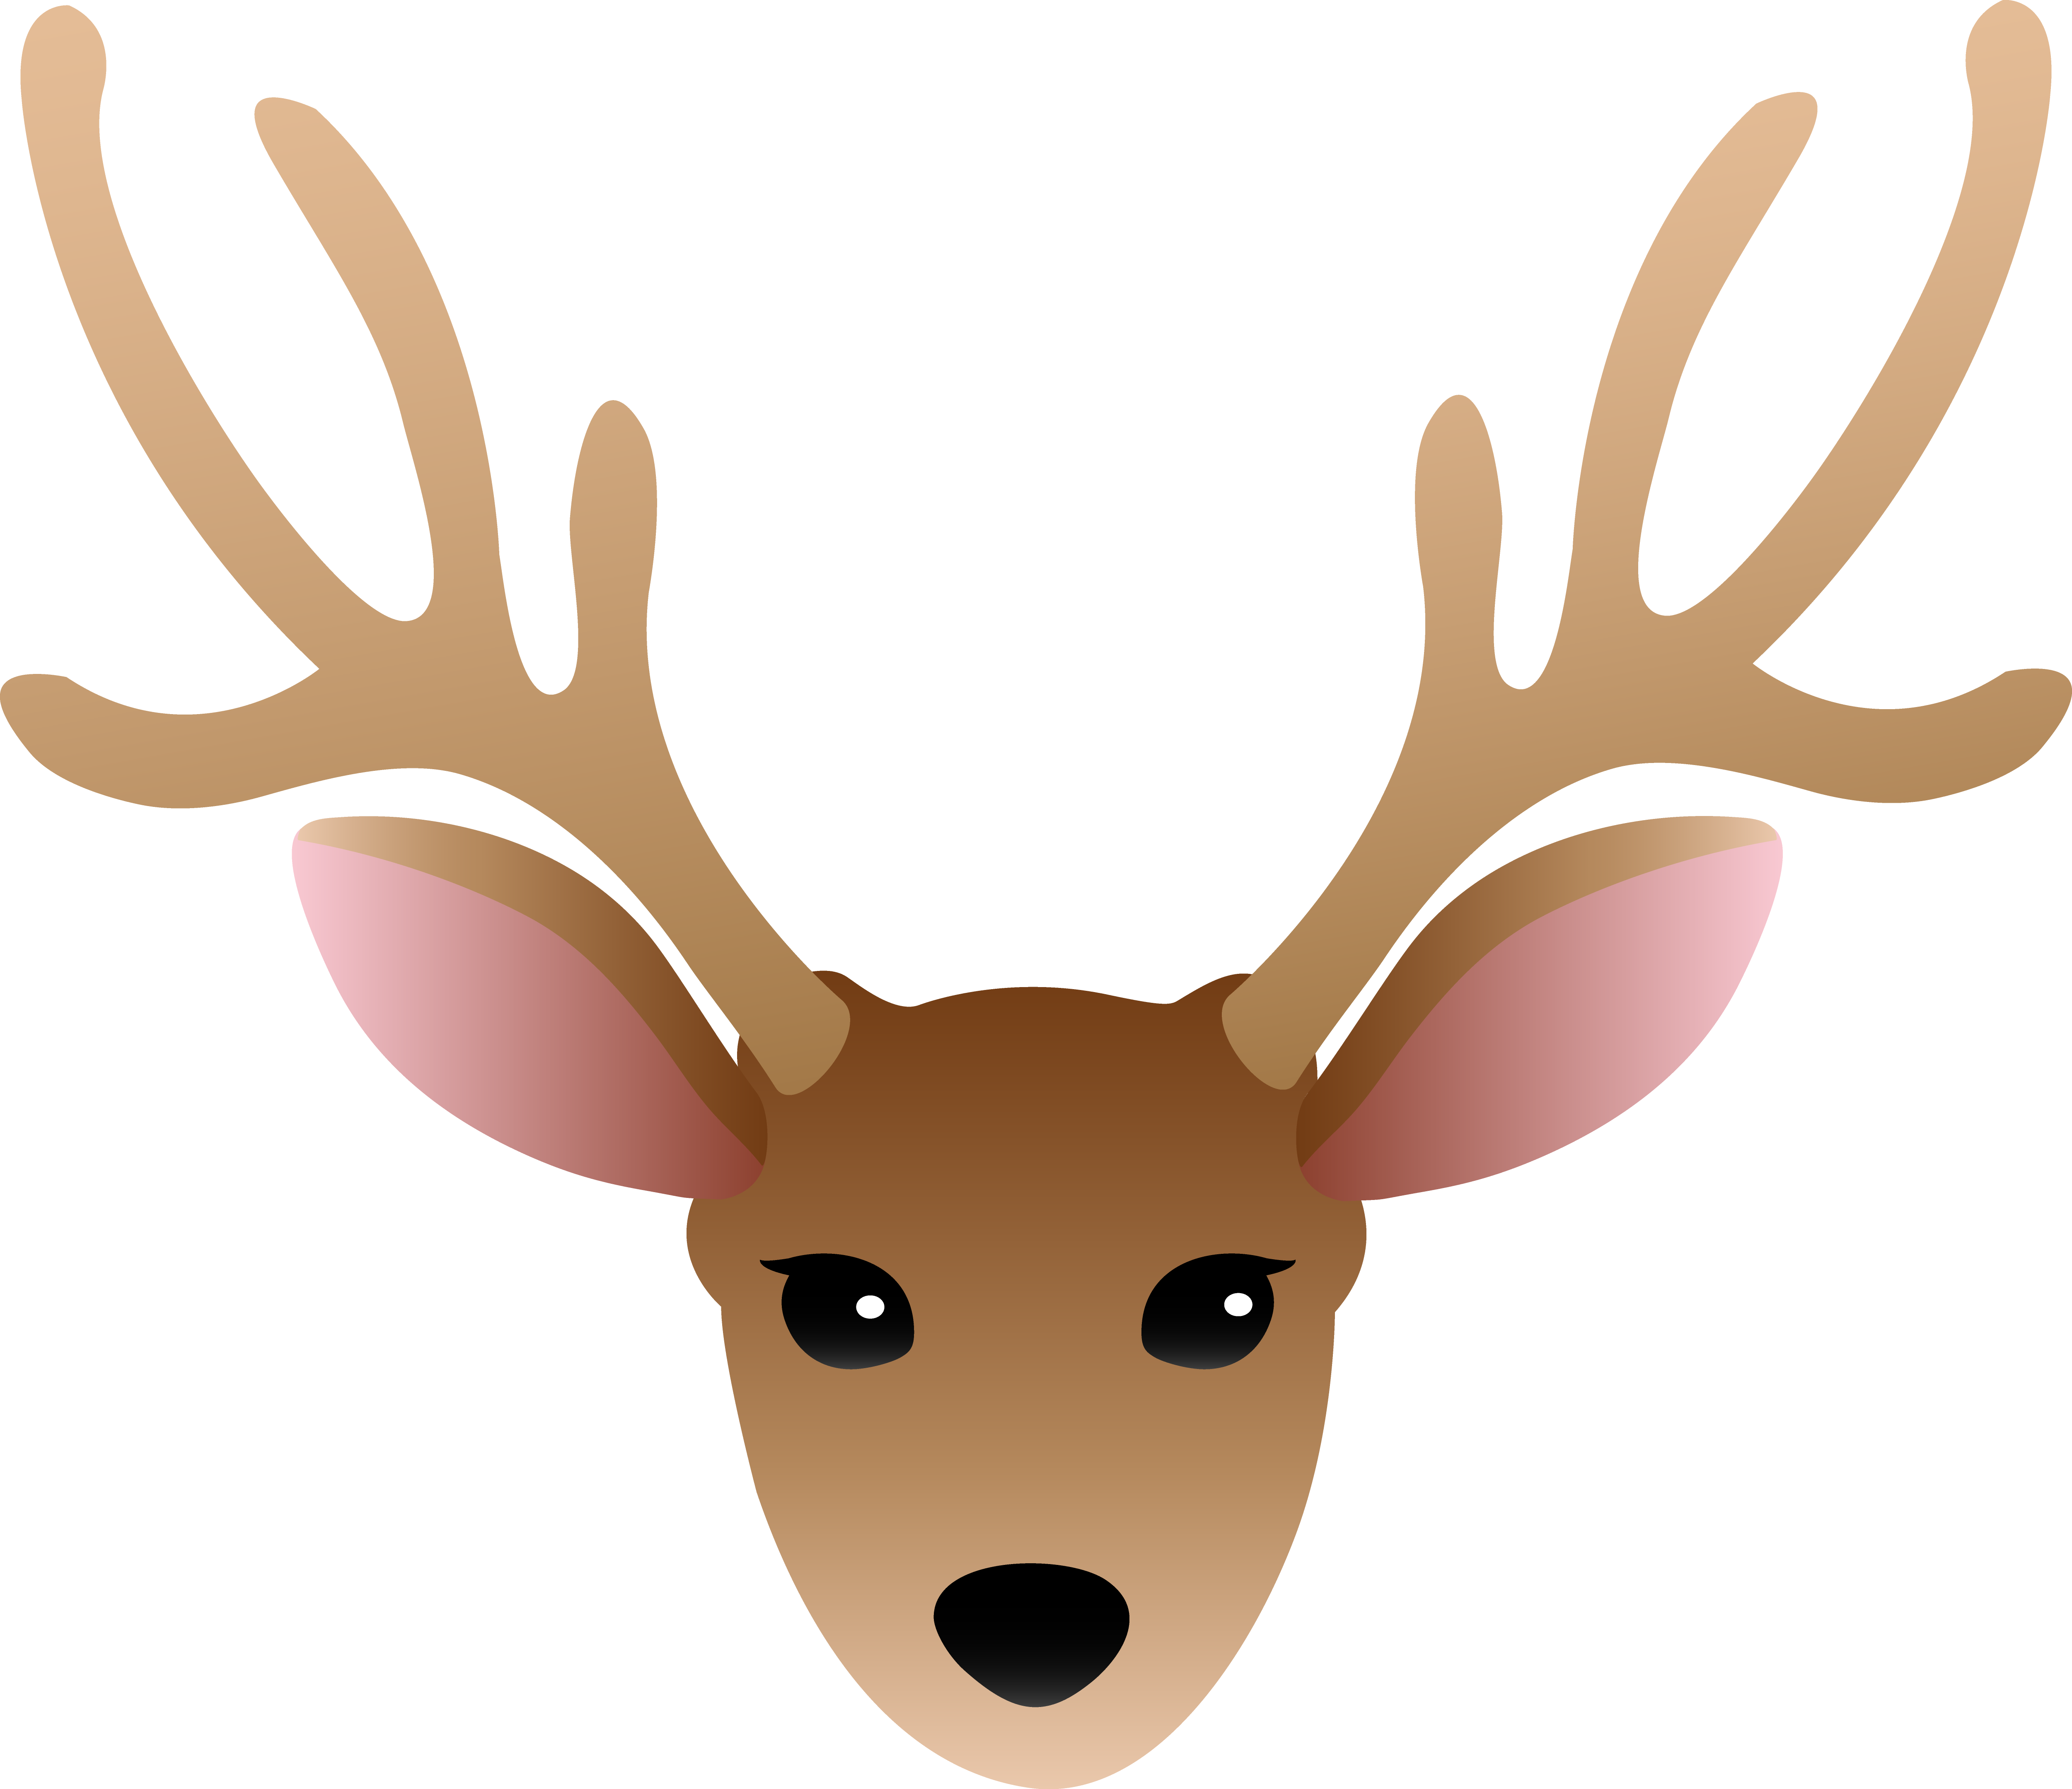 Best Photos of Reindeer Face Cartoon - Rudolph the Red Nosed ... - ClipArt  Best - ClipArt Best